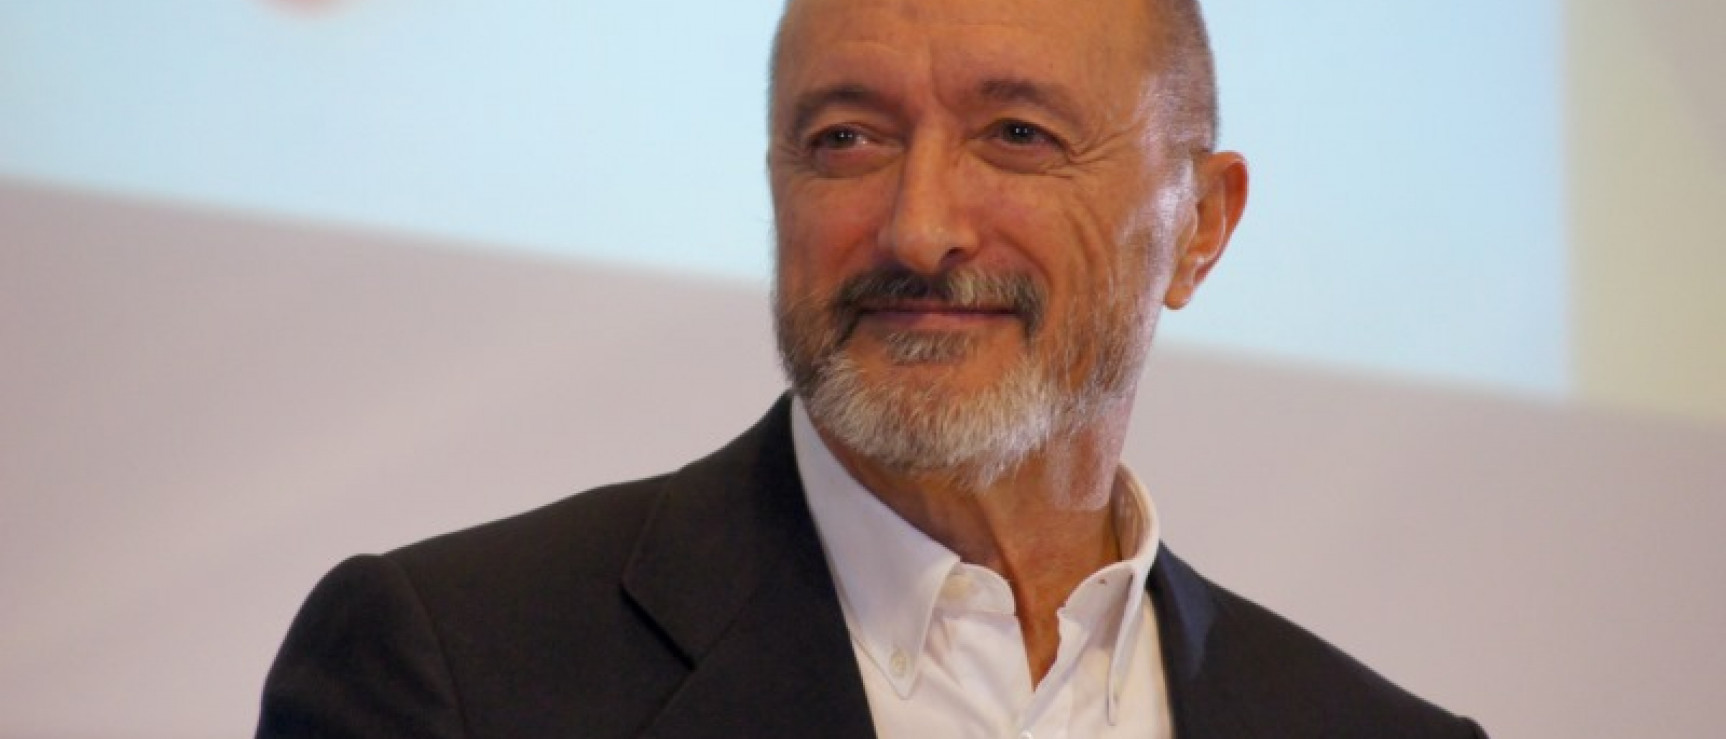 Arturo Pérez-Reverte, Premio Don Quijote de Periodismo.